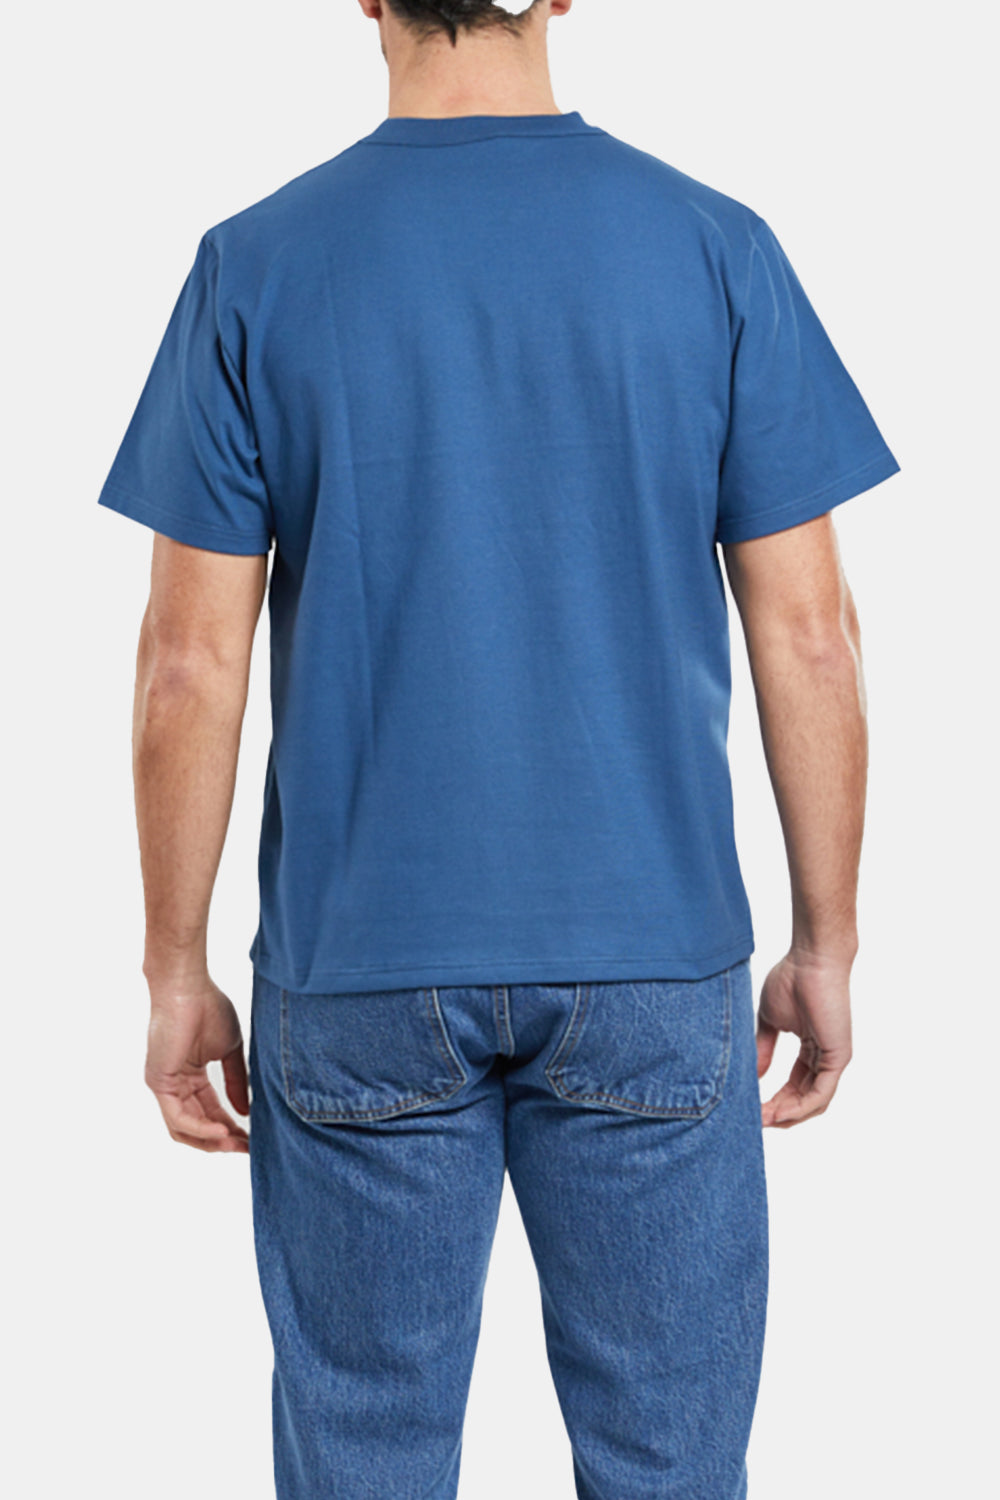 Armor Lux Heritage Organic Callac T-Shirt (Libeccio Blue)